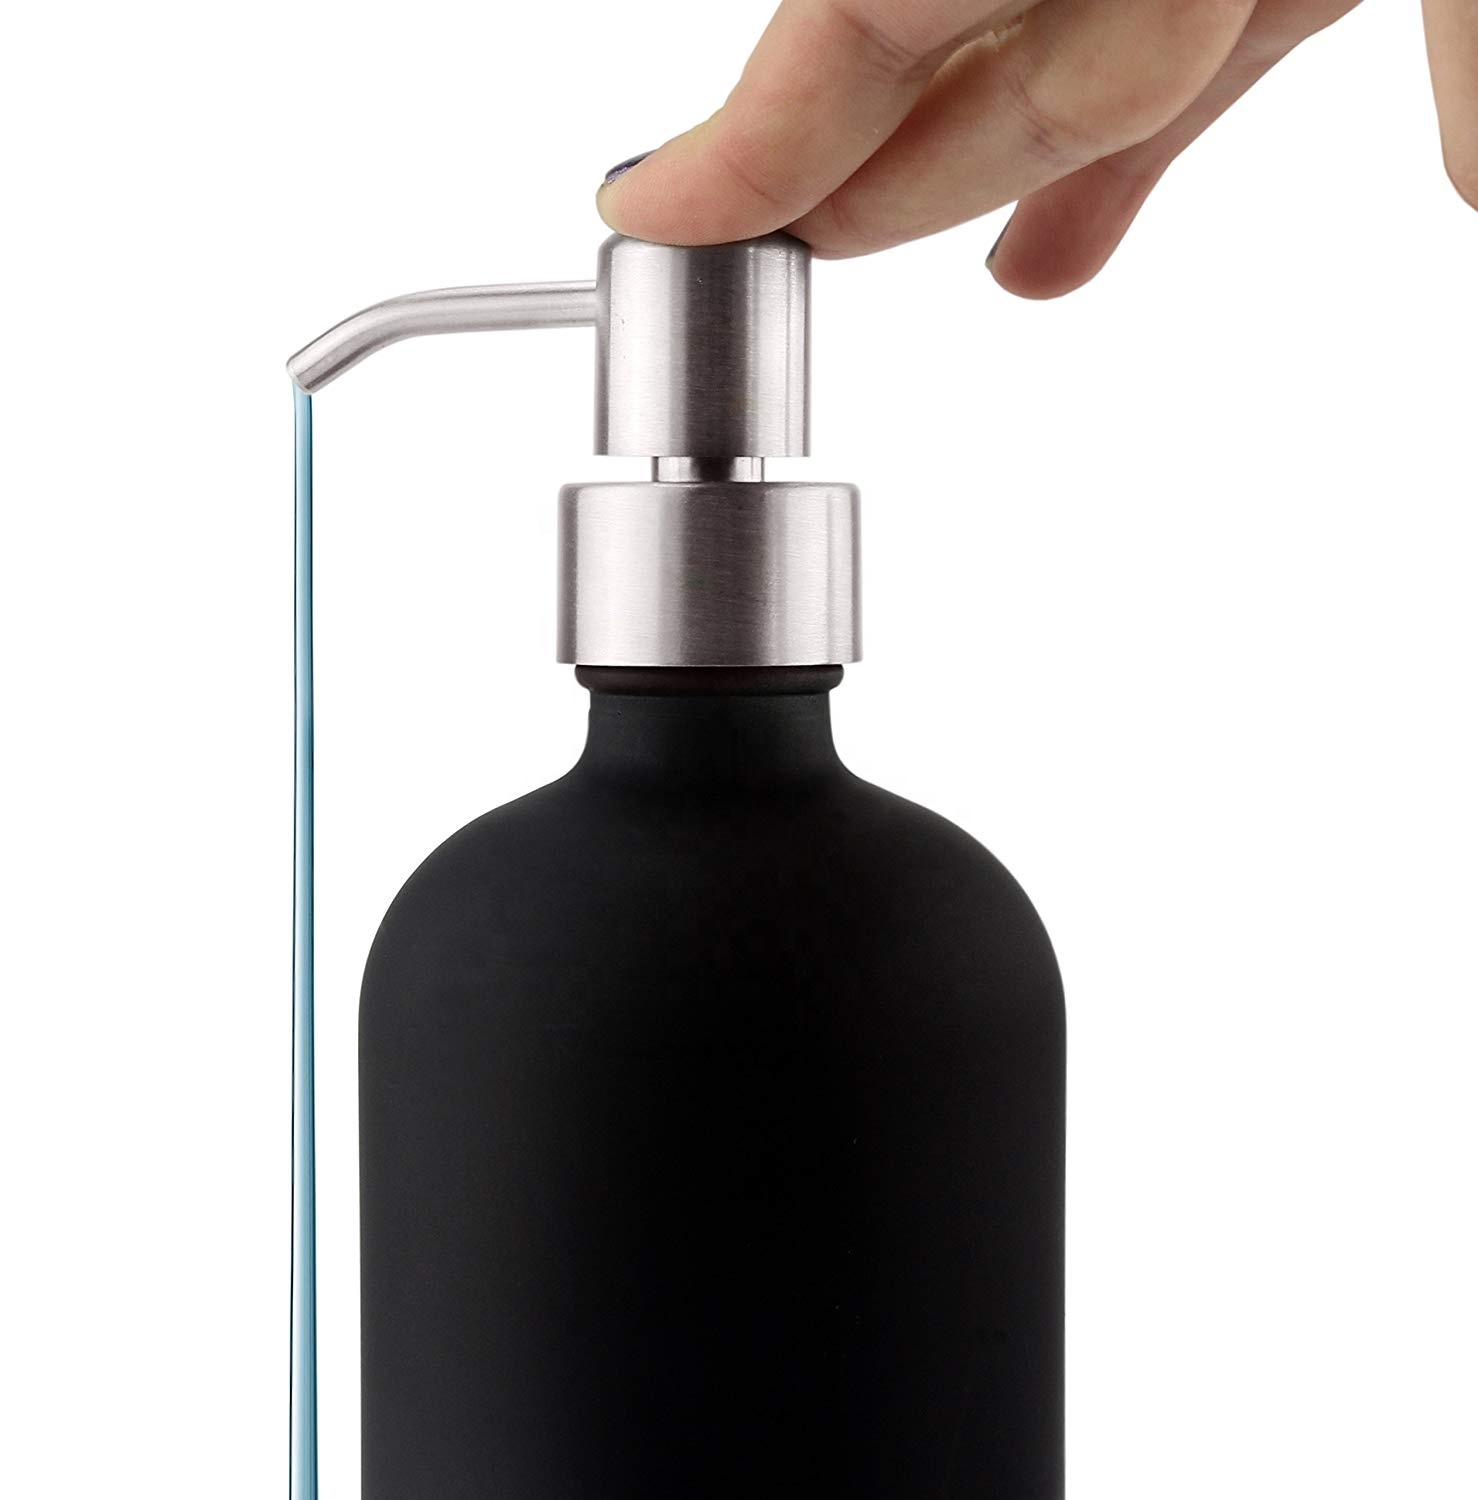 Large 500ml Matte Black Boston Round Glass Bottle with Soap Dispenser